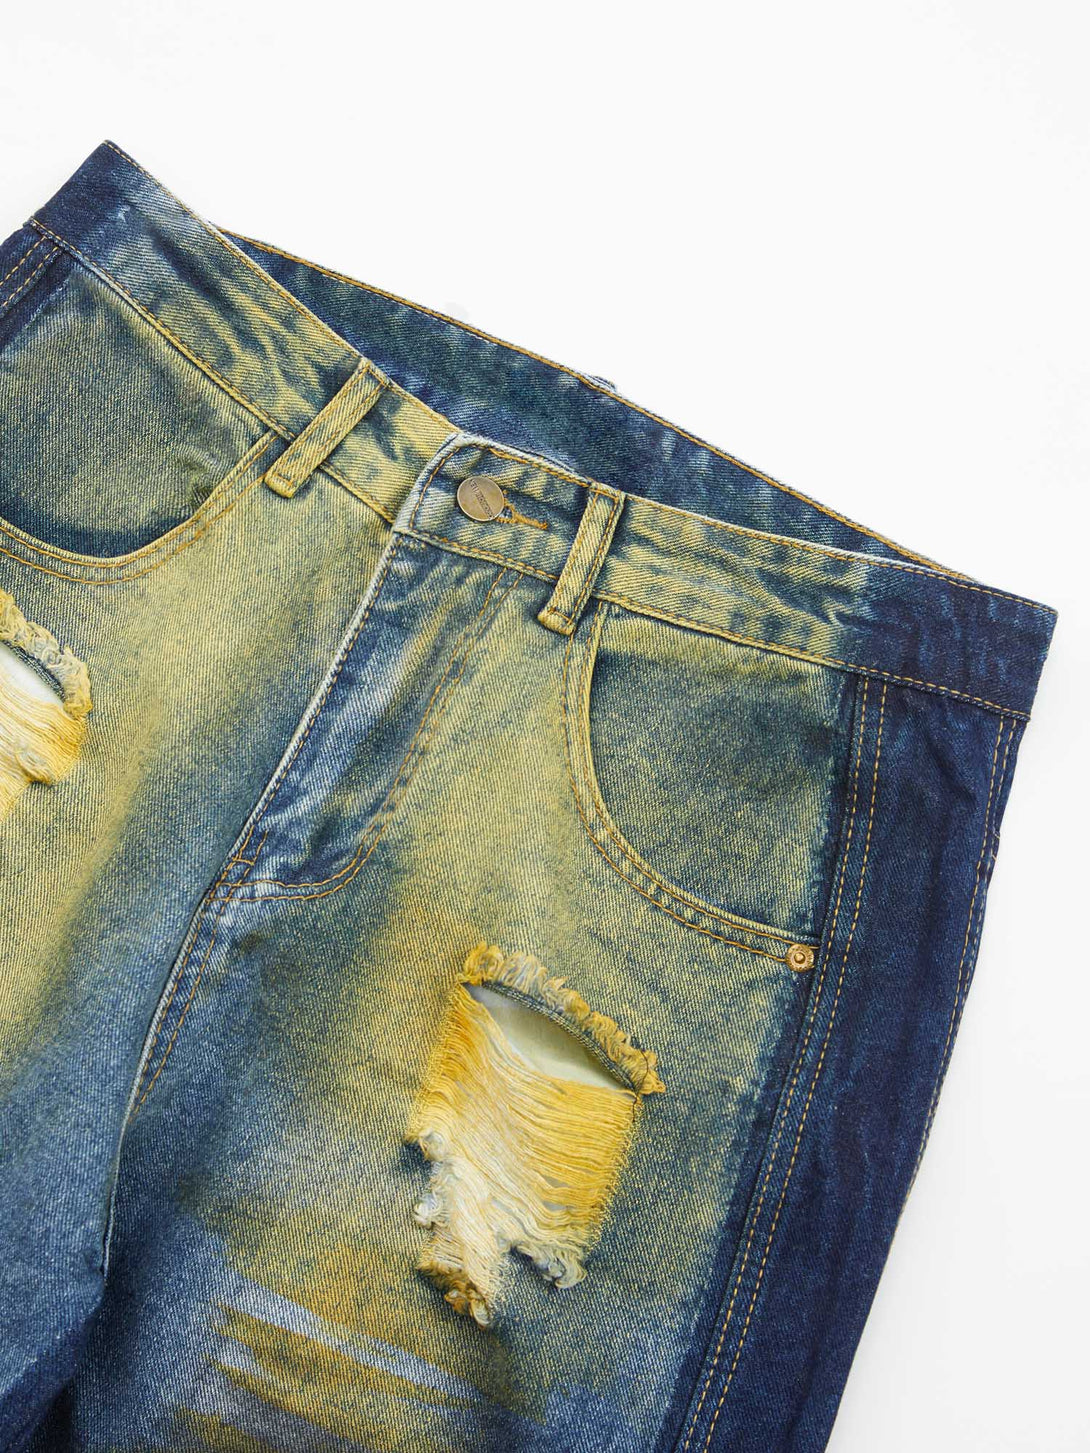 Majesda® - Hip-hop Washed Distressed Loose Spray-dyed Jeans- Outfit Ideas - Streetwear Fashion - majesda.com